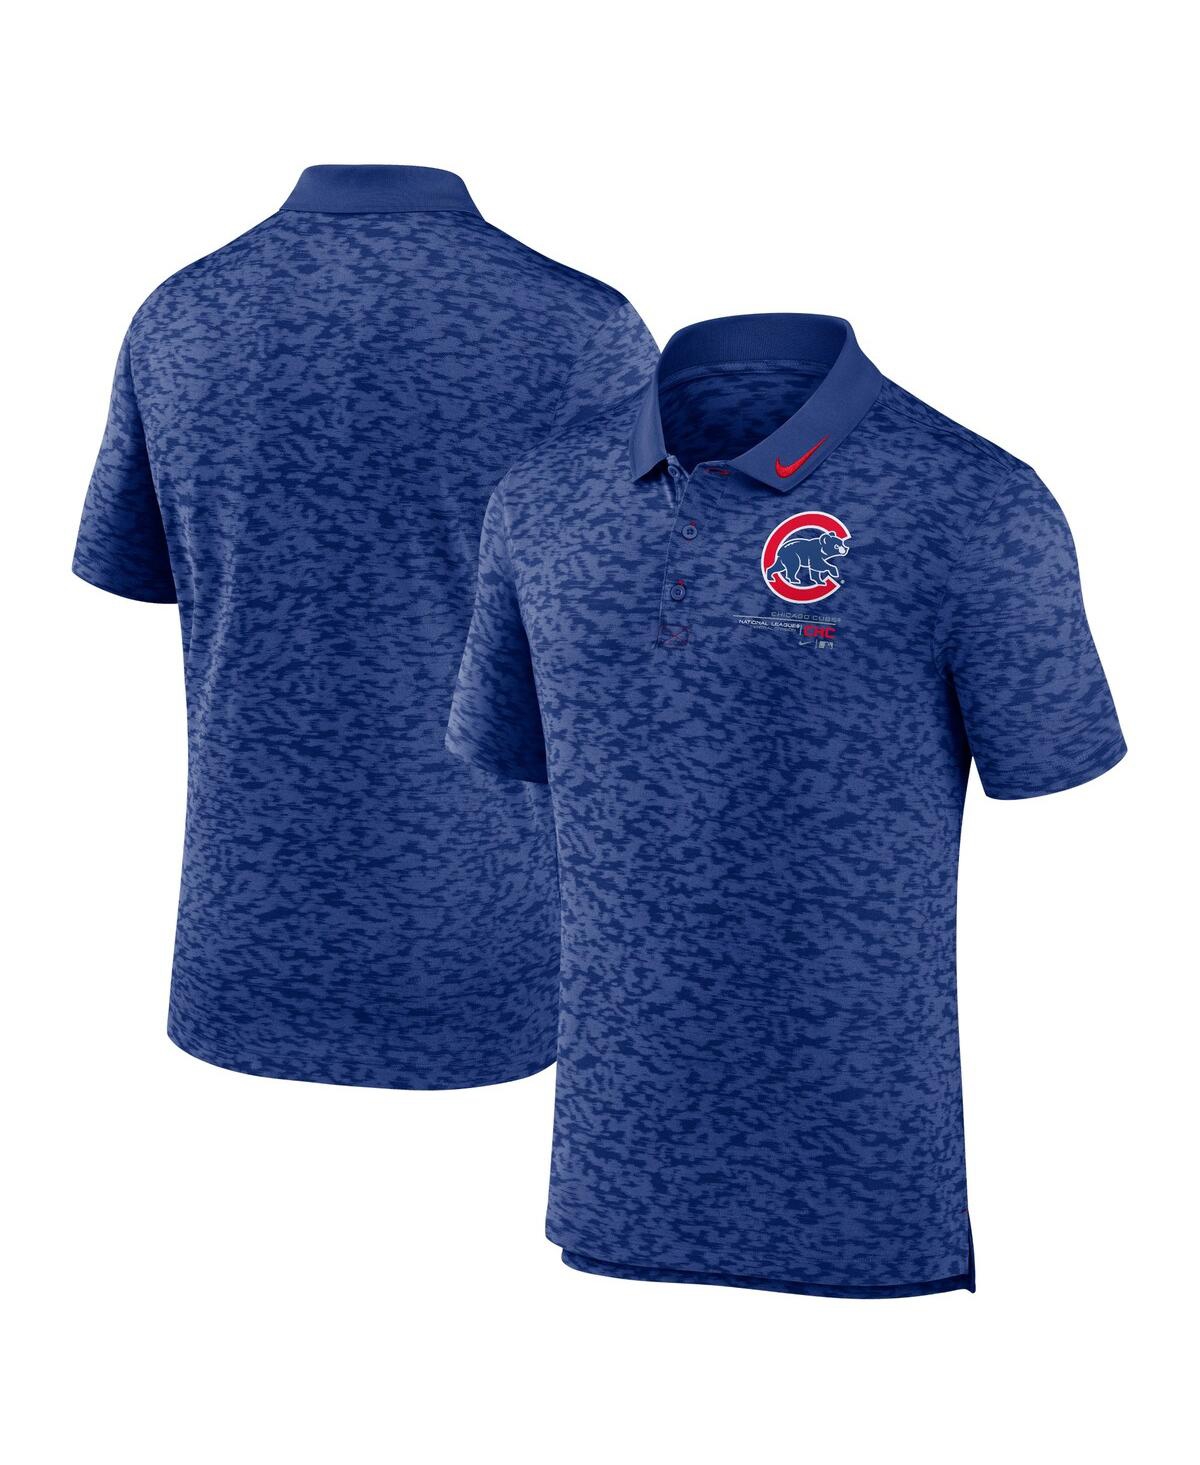 Men's Nike Royal Chicago Cubs Next Level Polo Shirt - Royal